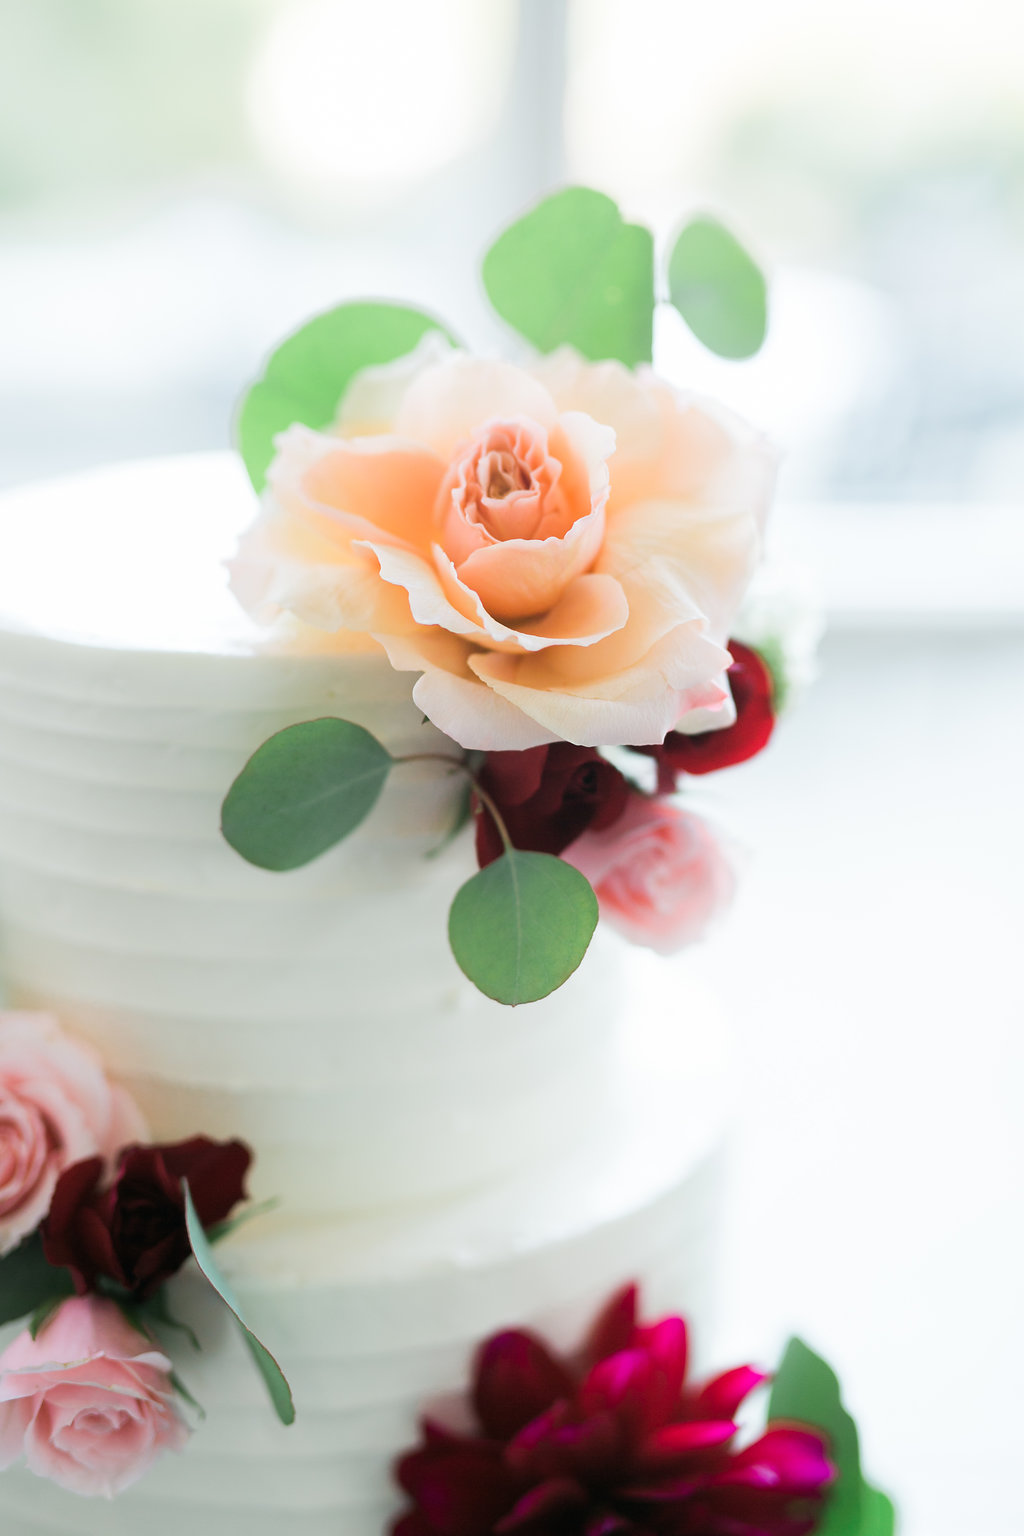 Fullerton Wedding Venue - Summit House Wedding — The Overwhelmed Bride Wedding Blog